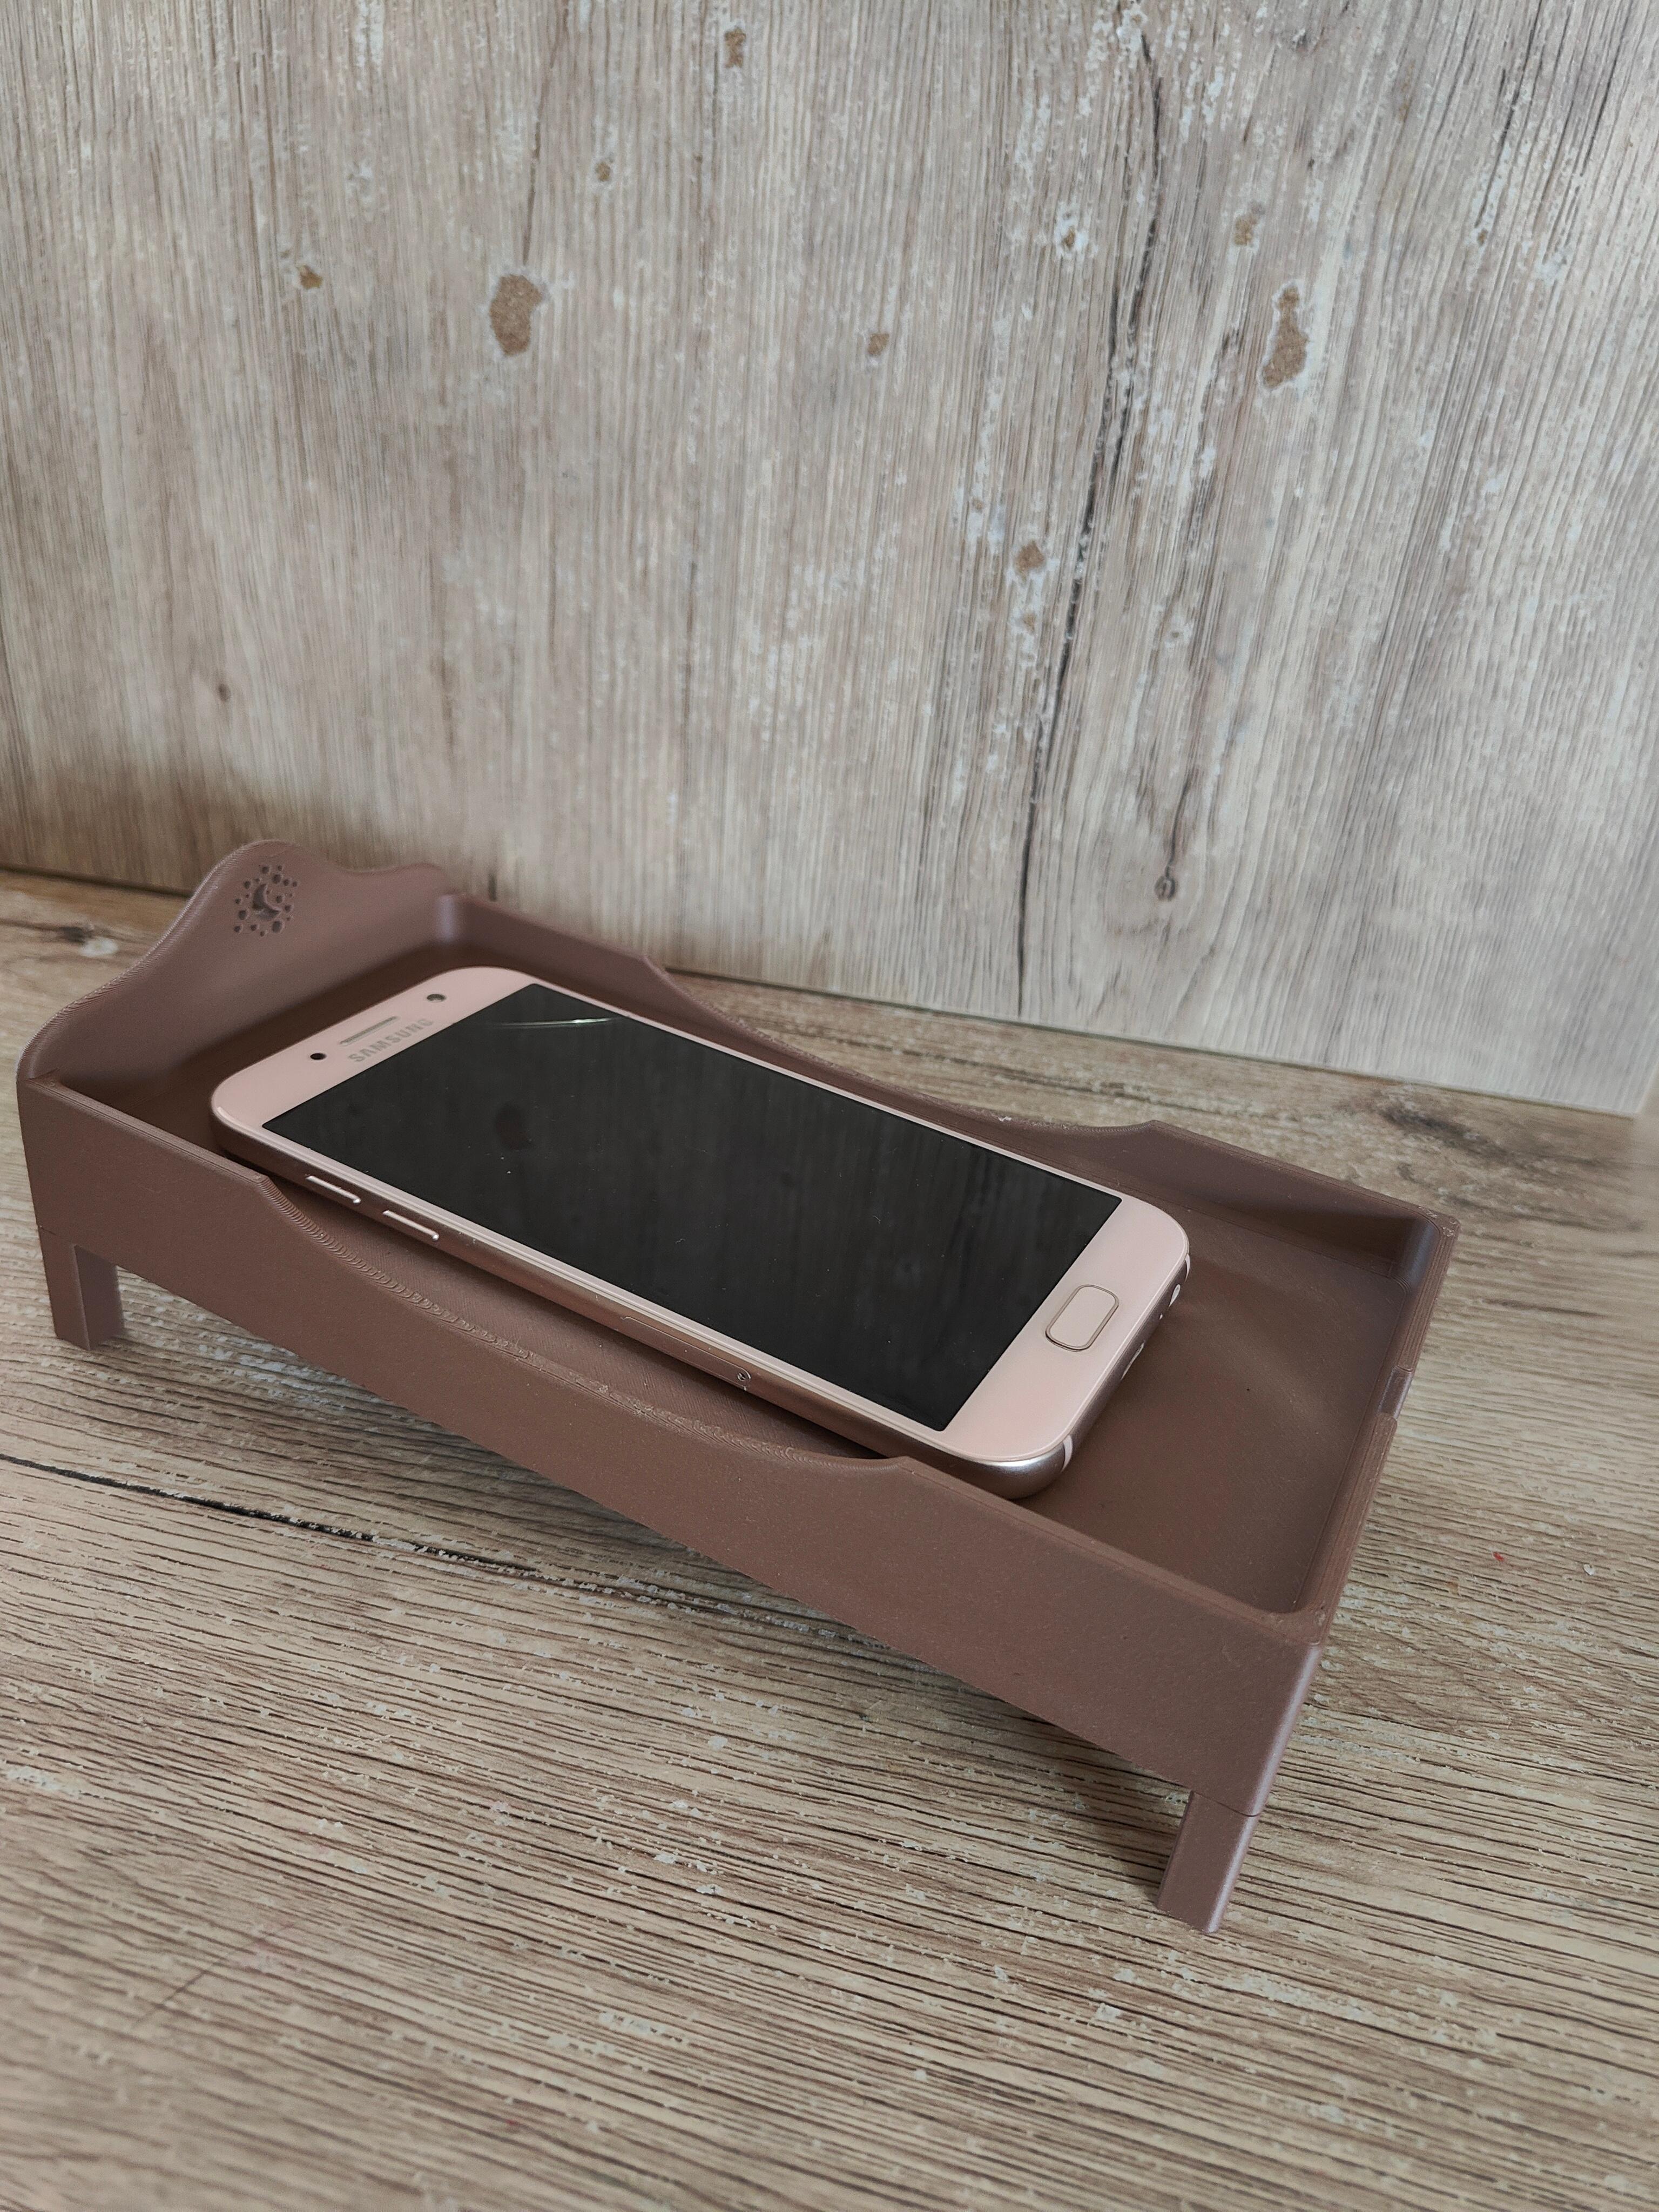 Smartphone Bed 3d model